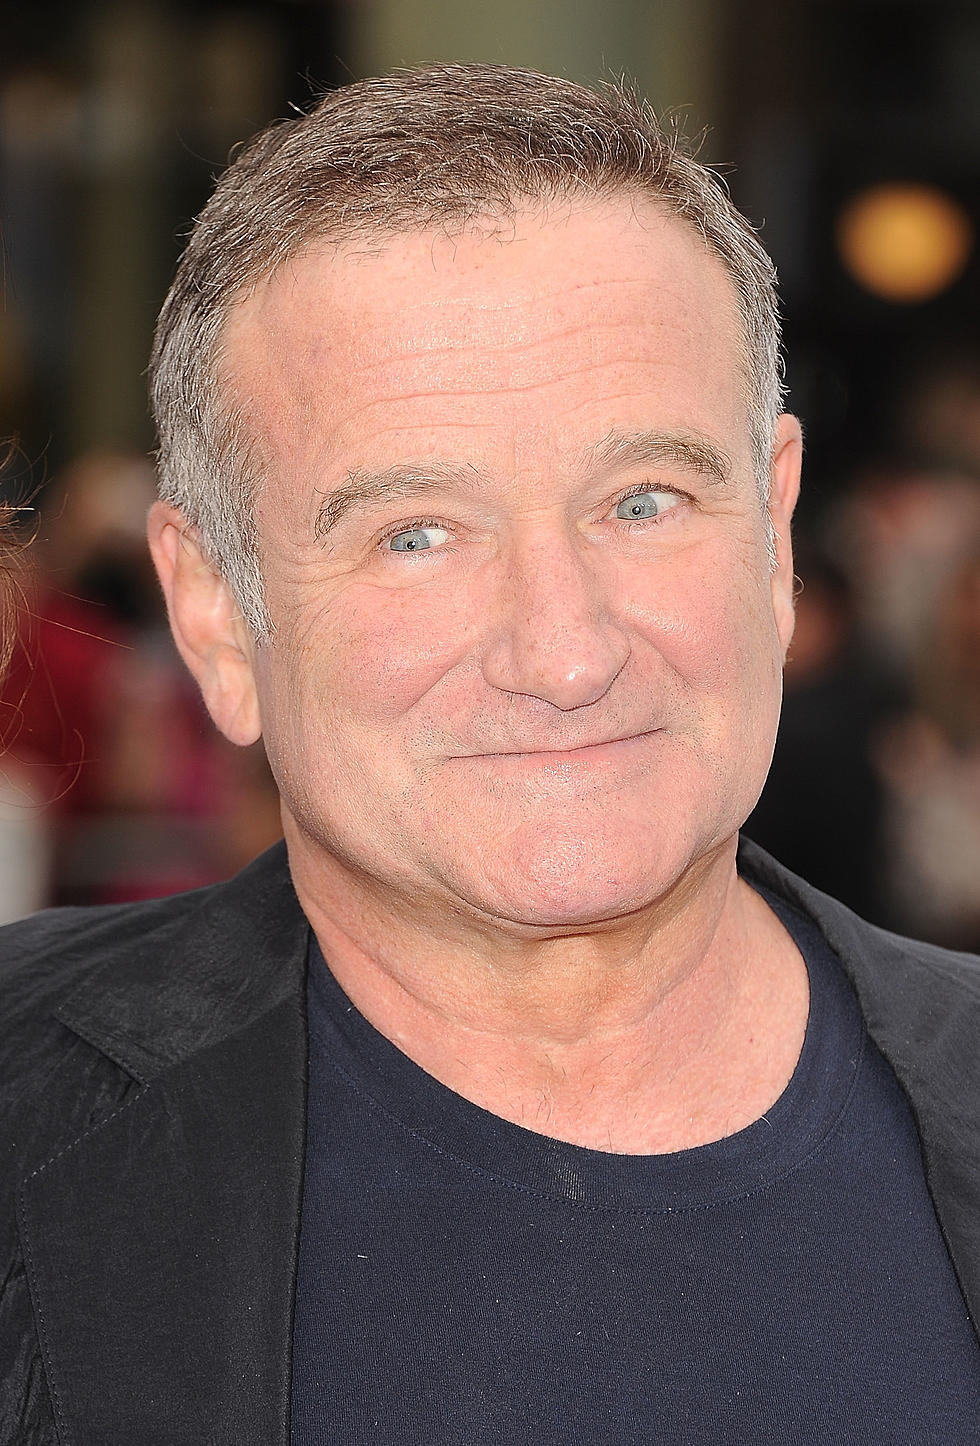 Breaking News: Robin Williams Had Parkinson’s Disease